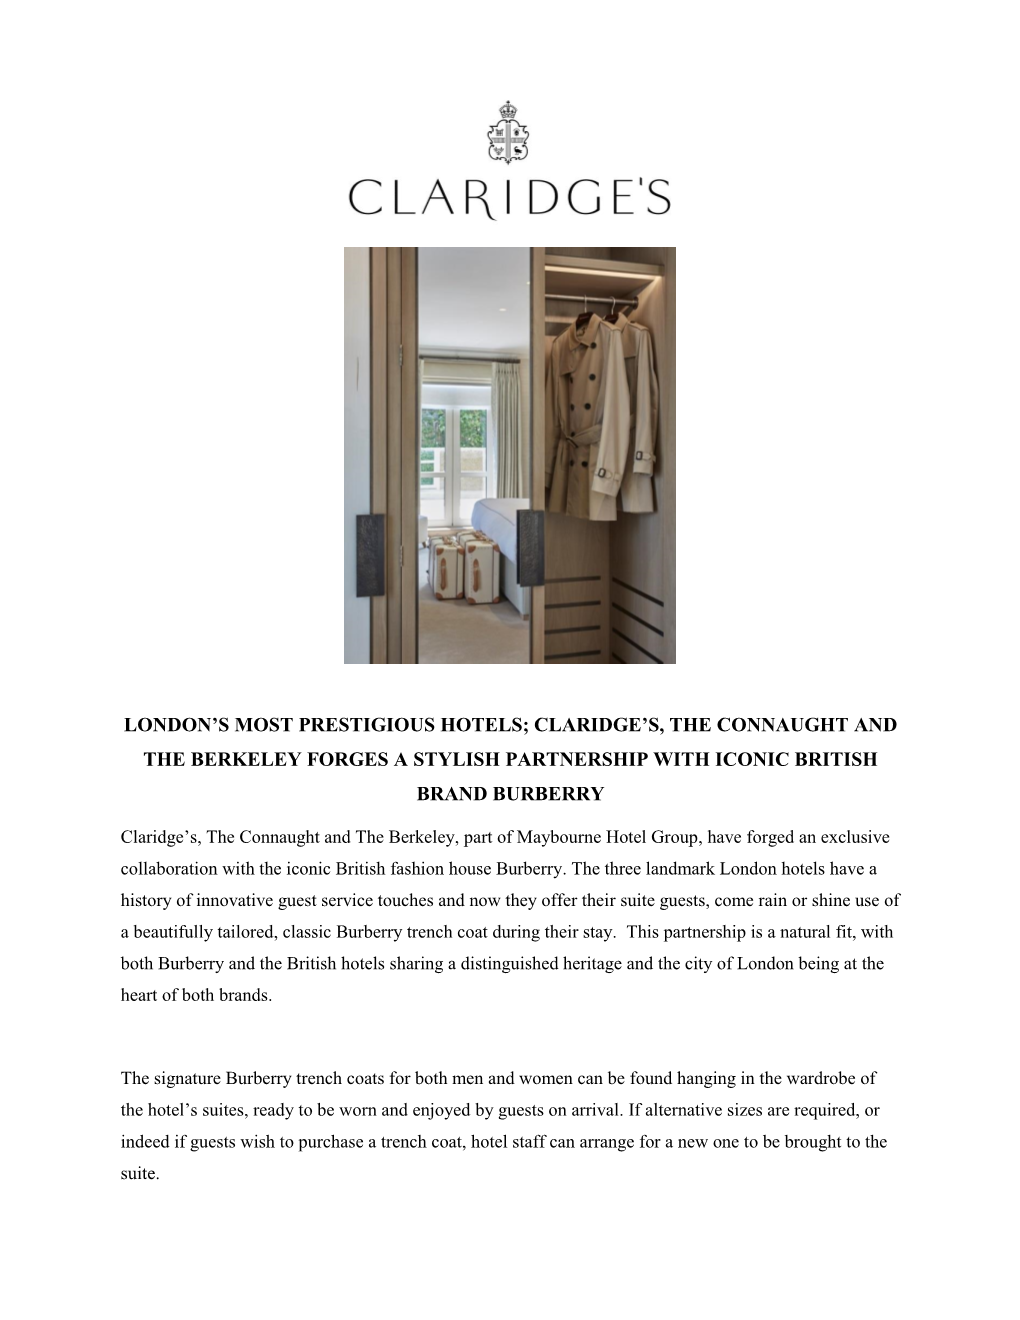 Claridge's Burberry Partnership